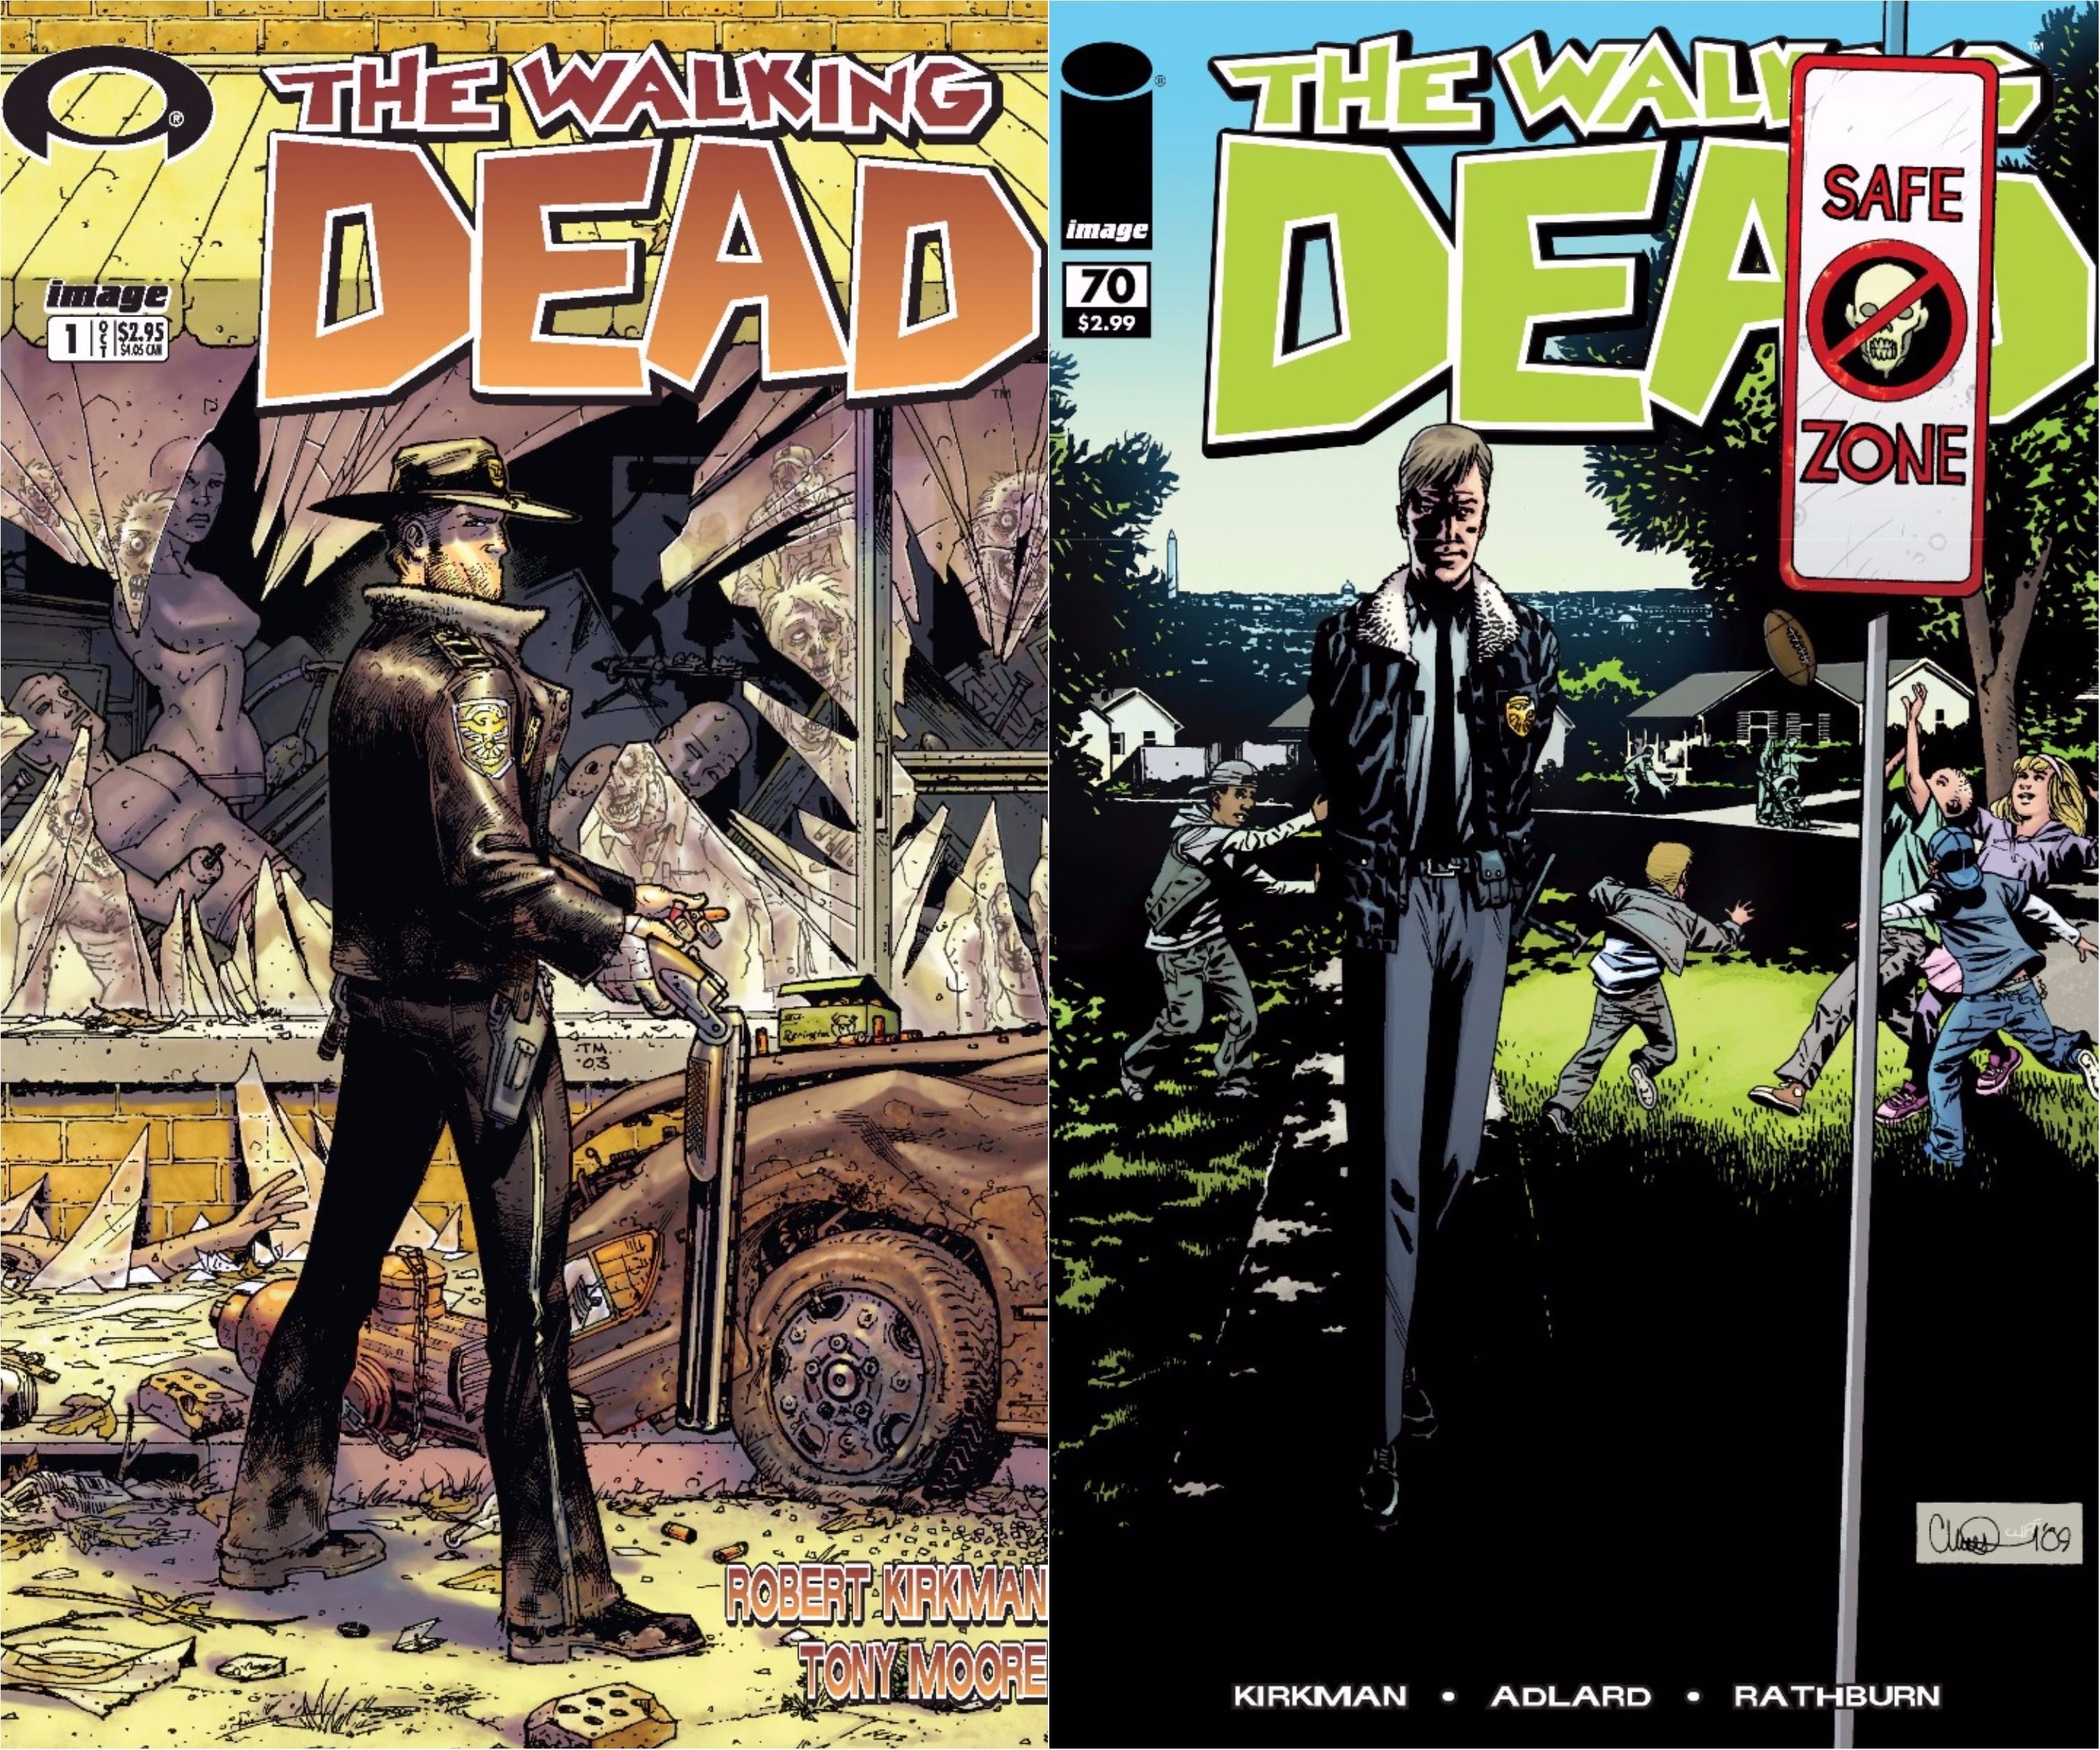 The Walking Dead issue 1 beside issue 70